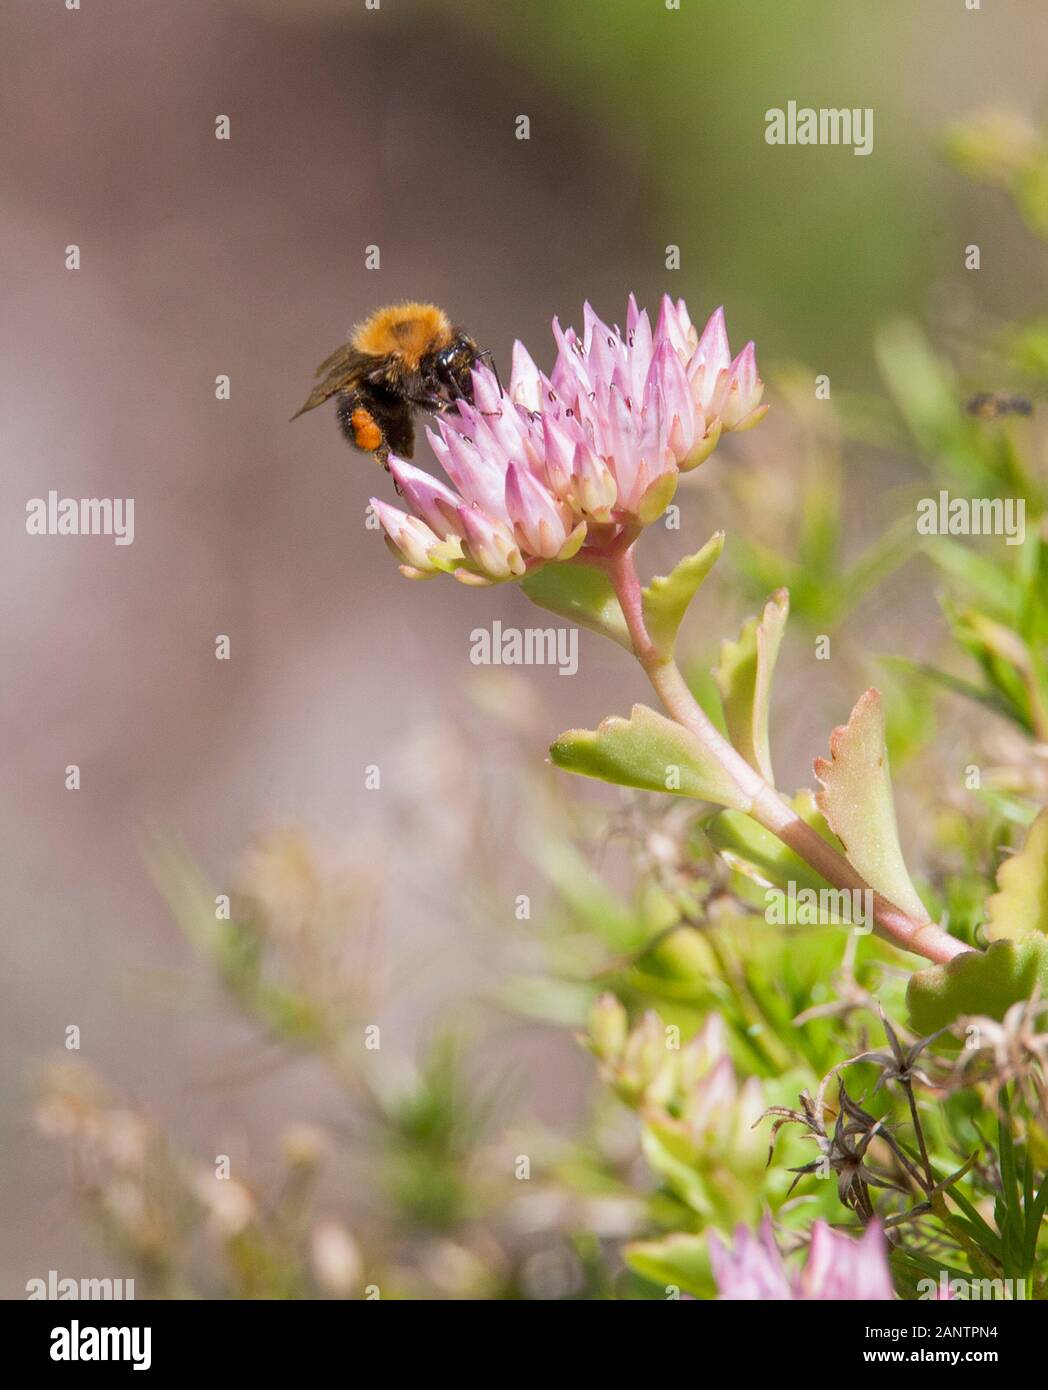 BUMBLEBEE out in garden on flower of Sedum Stock Photo